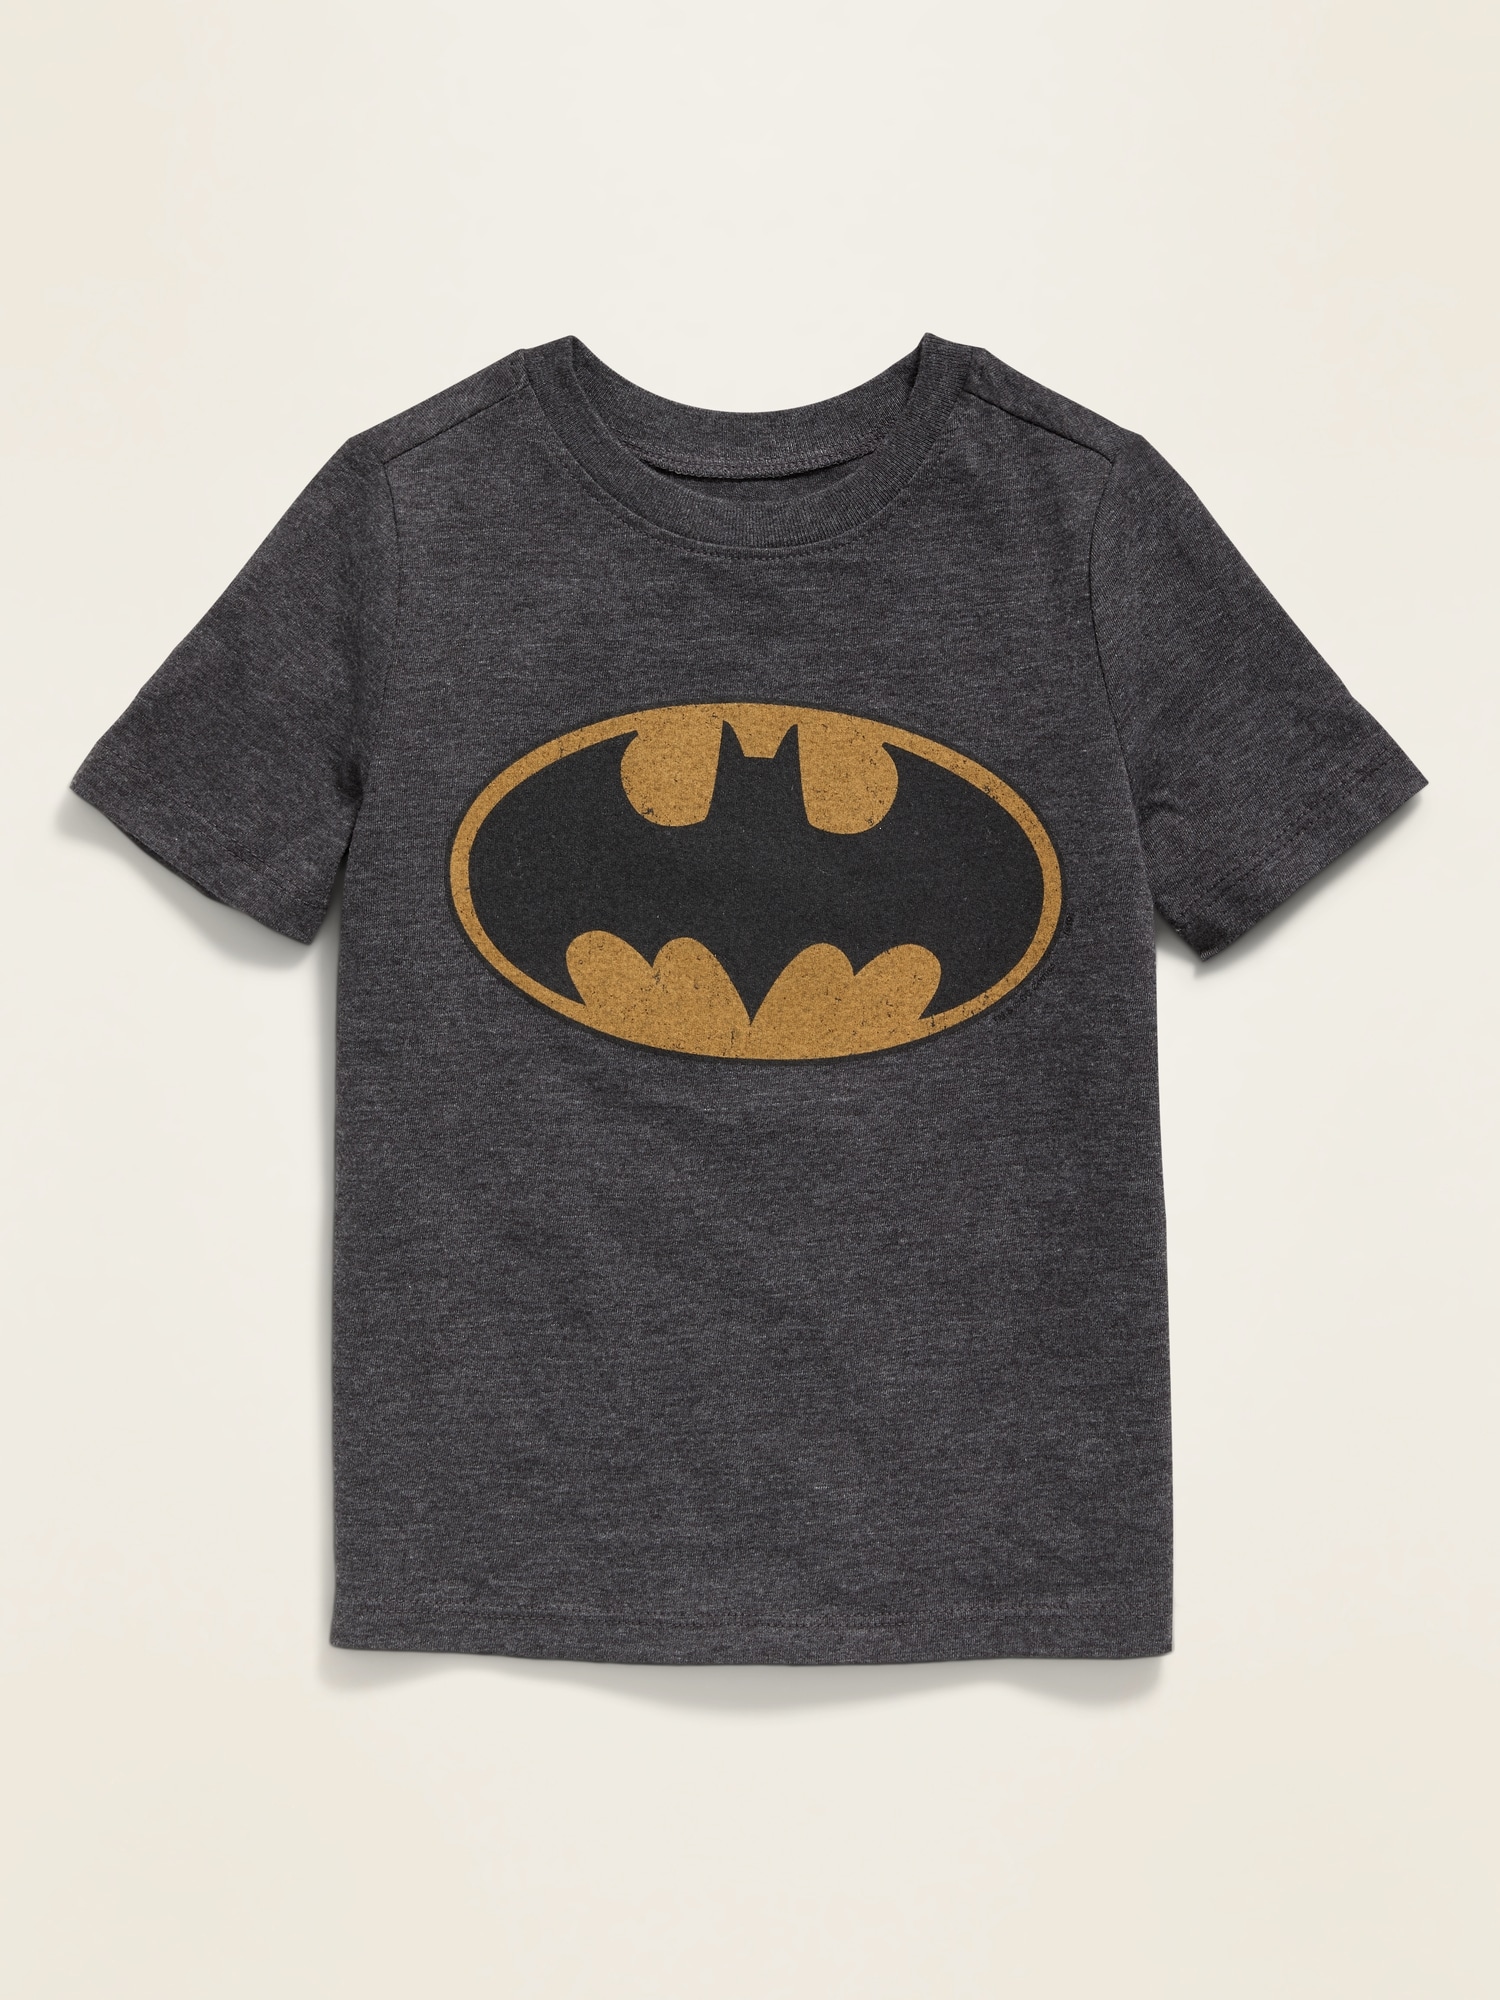 gap batman t shirt